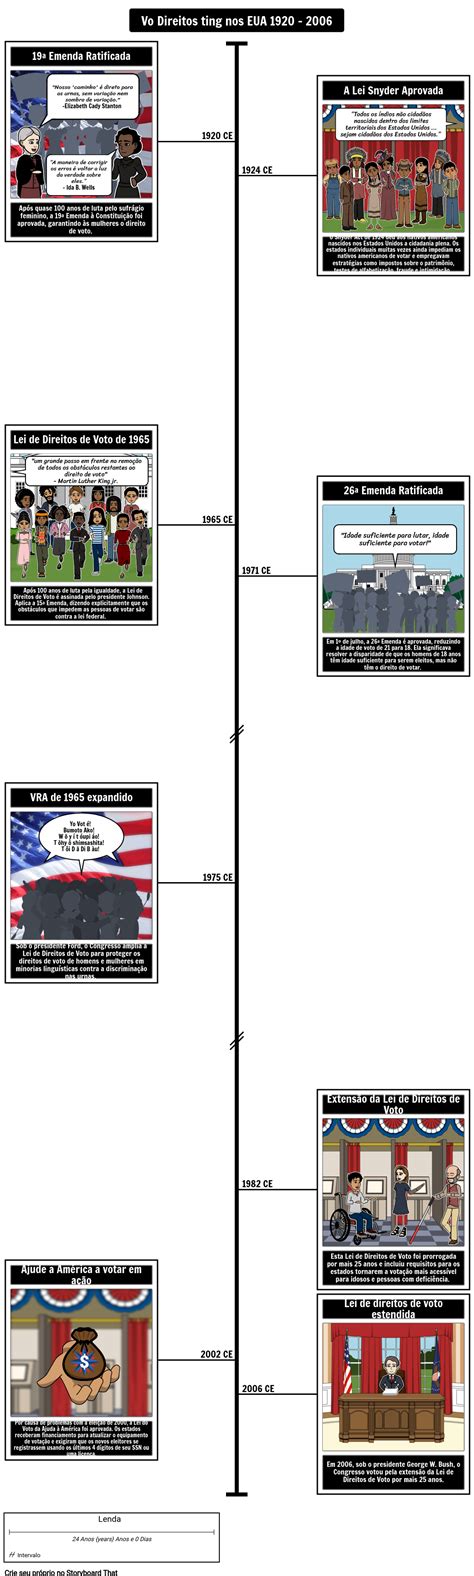 cronograma de direitos de voto 2 storyboard por pt examples